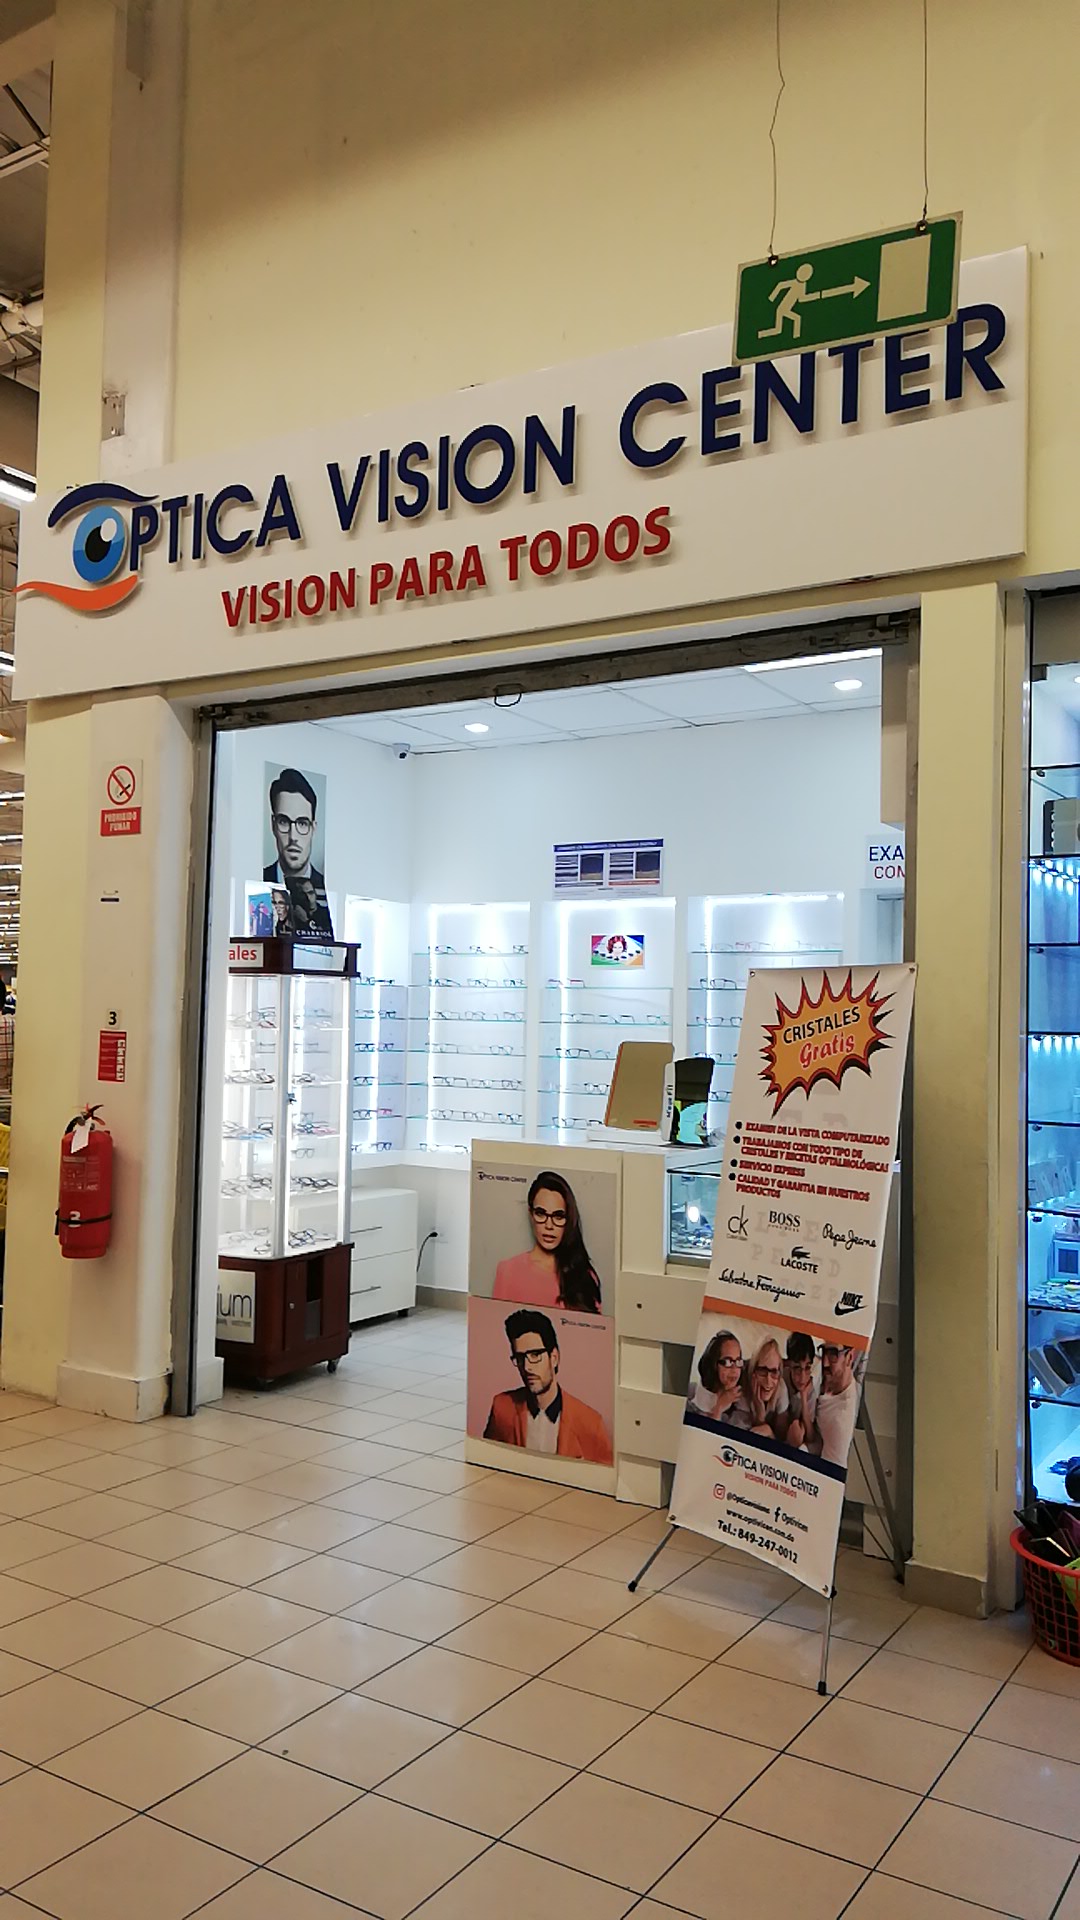 Optica Vision Center